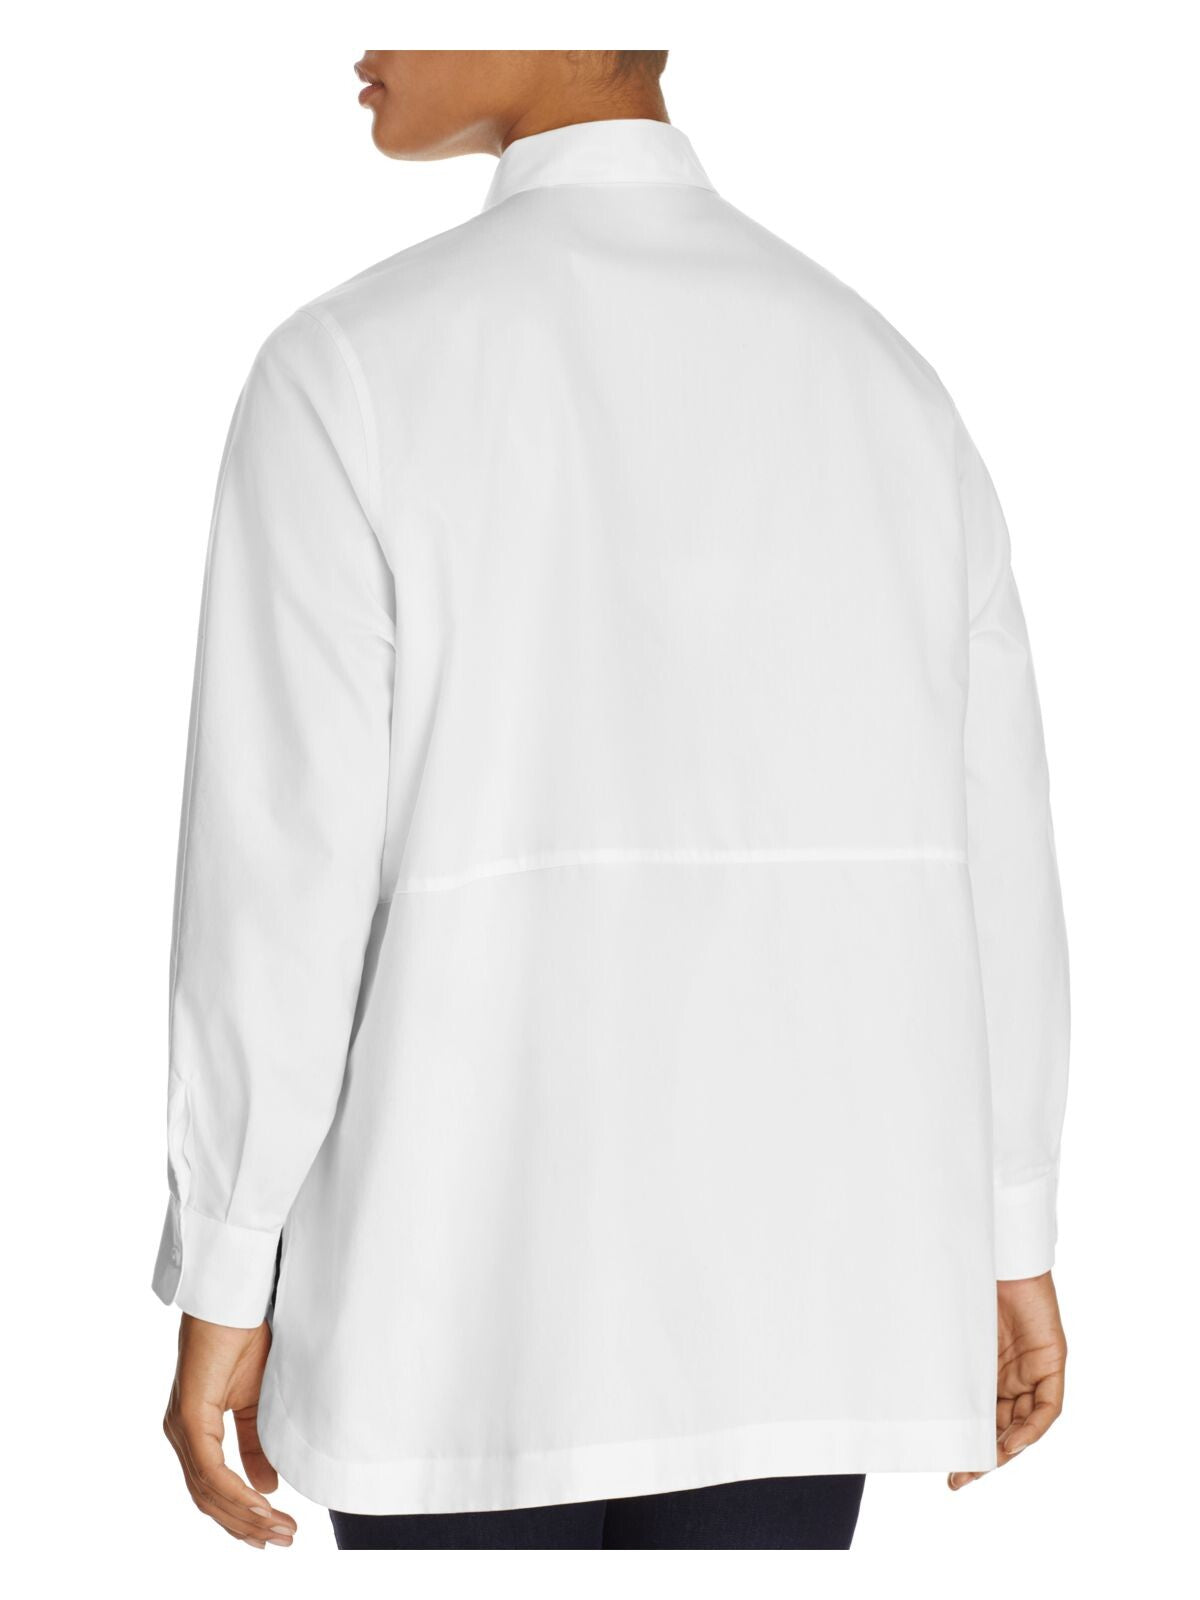 FOXCROFT Womens White Non Iron Cuffed Sleeve Collared Wear To Work Tunic Top Plus 14W